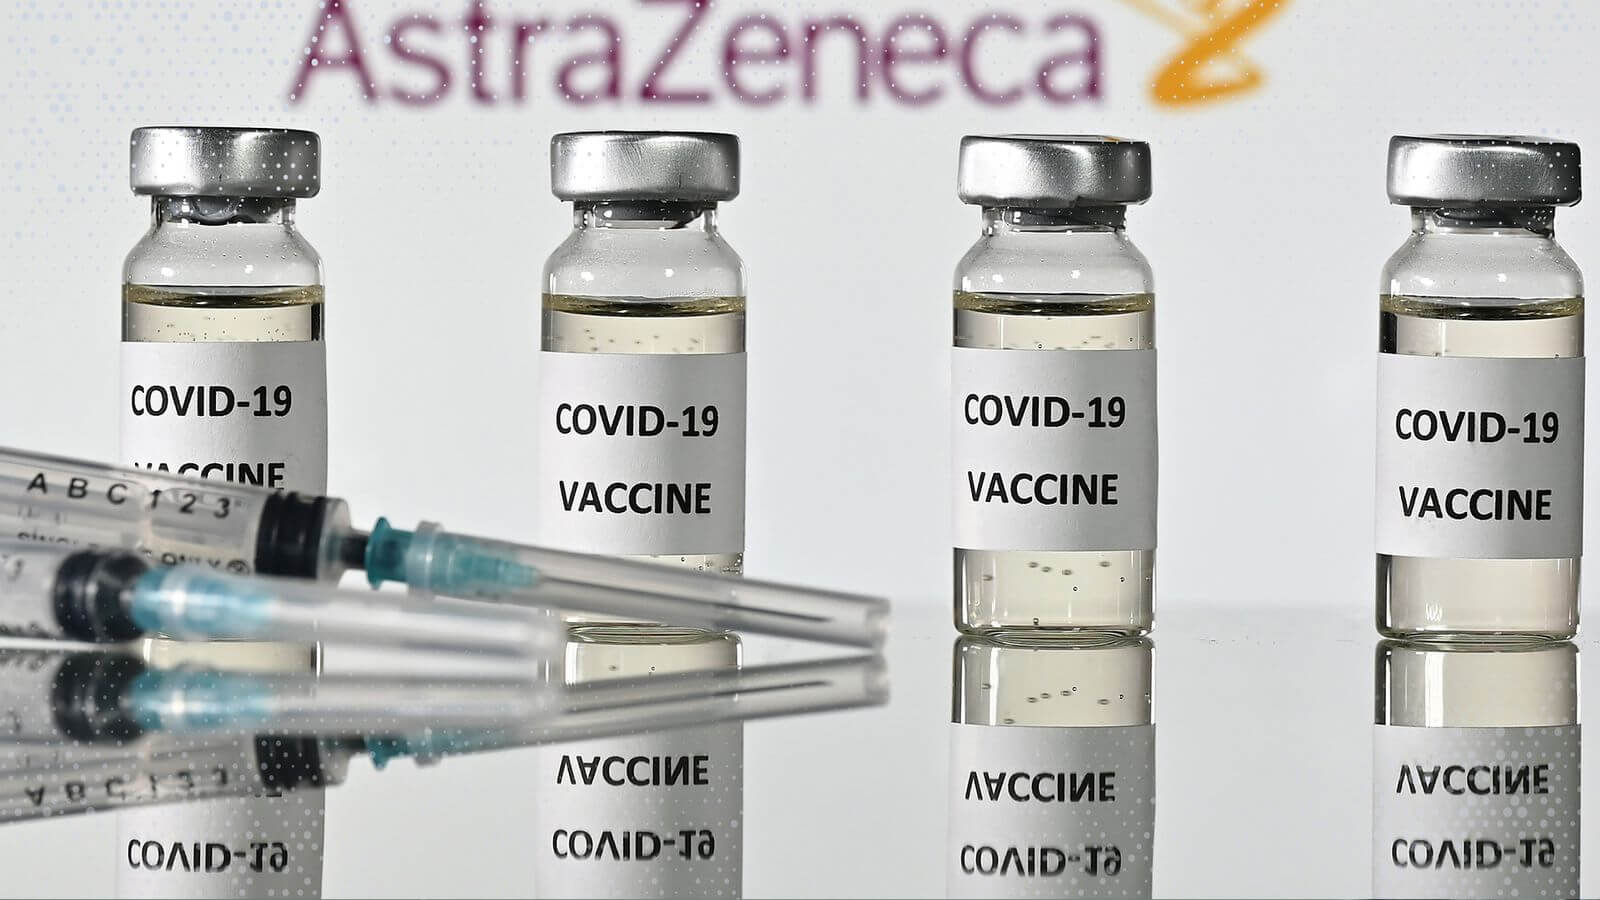 AstraZeneca initiates global withdrawal of Covid-19 vaccine